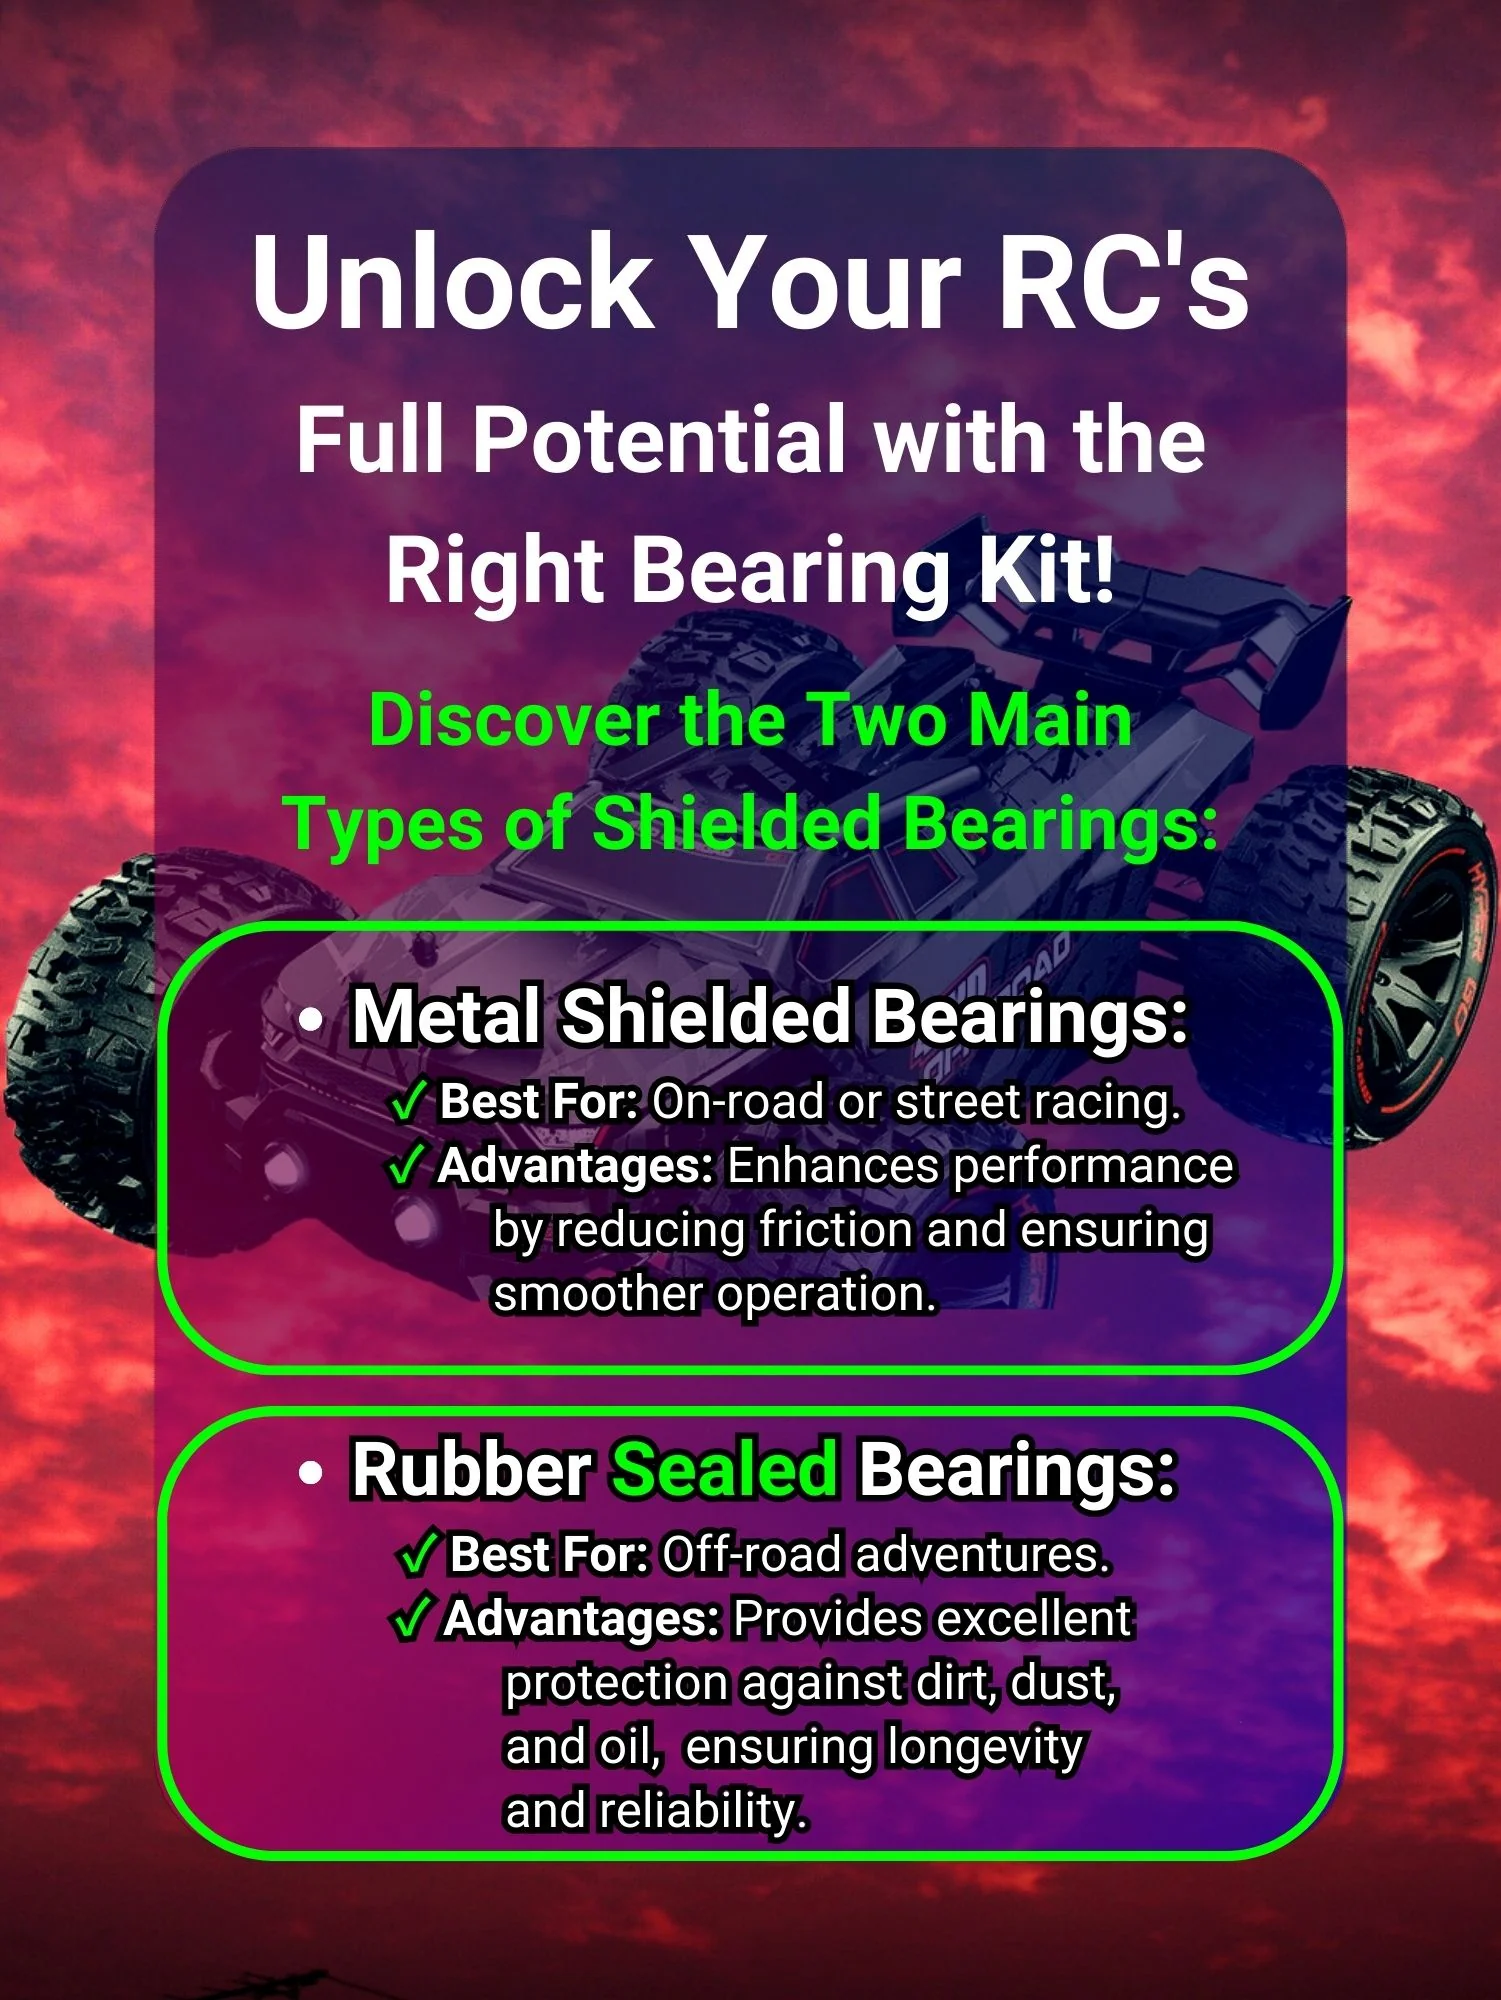 RCScrewZ Metal Shielded Bearings sch033b for Schumacher Cat XLS Masami #K172 - Picture 2 of 12